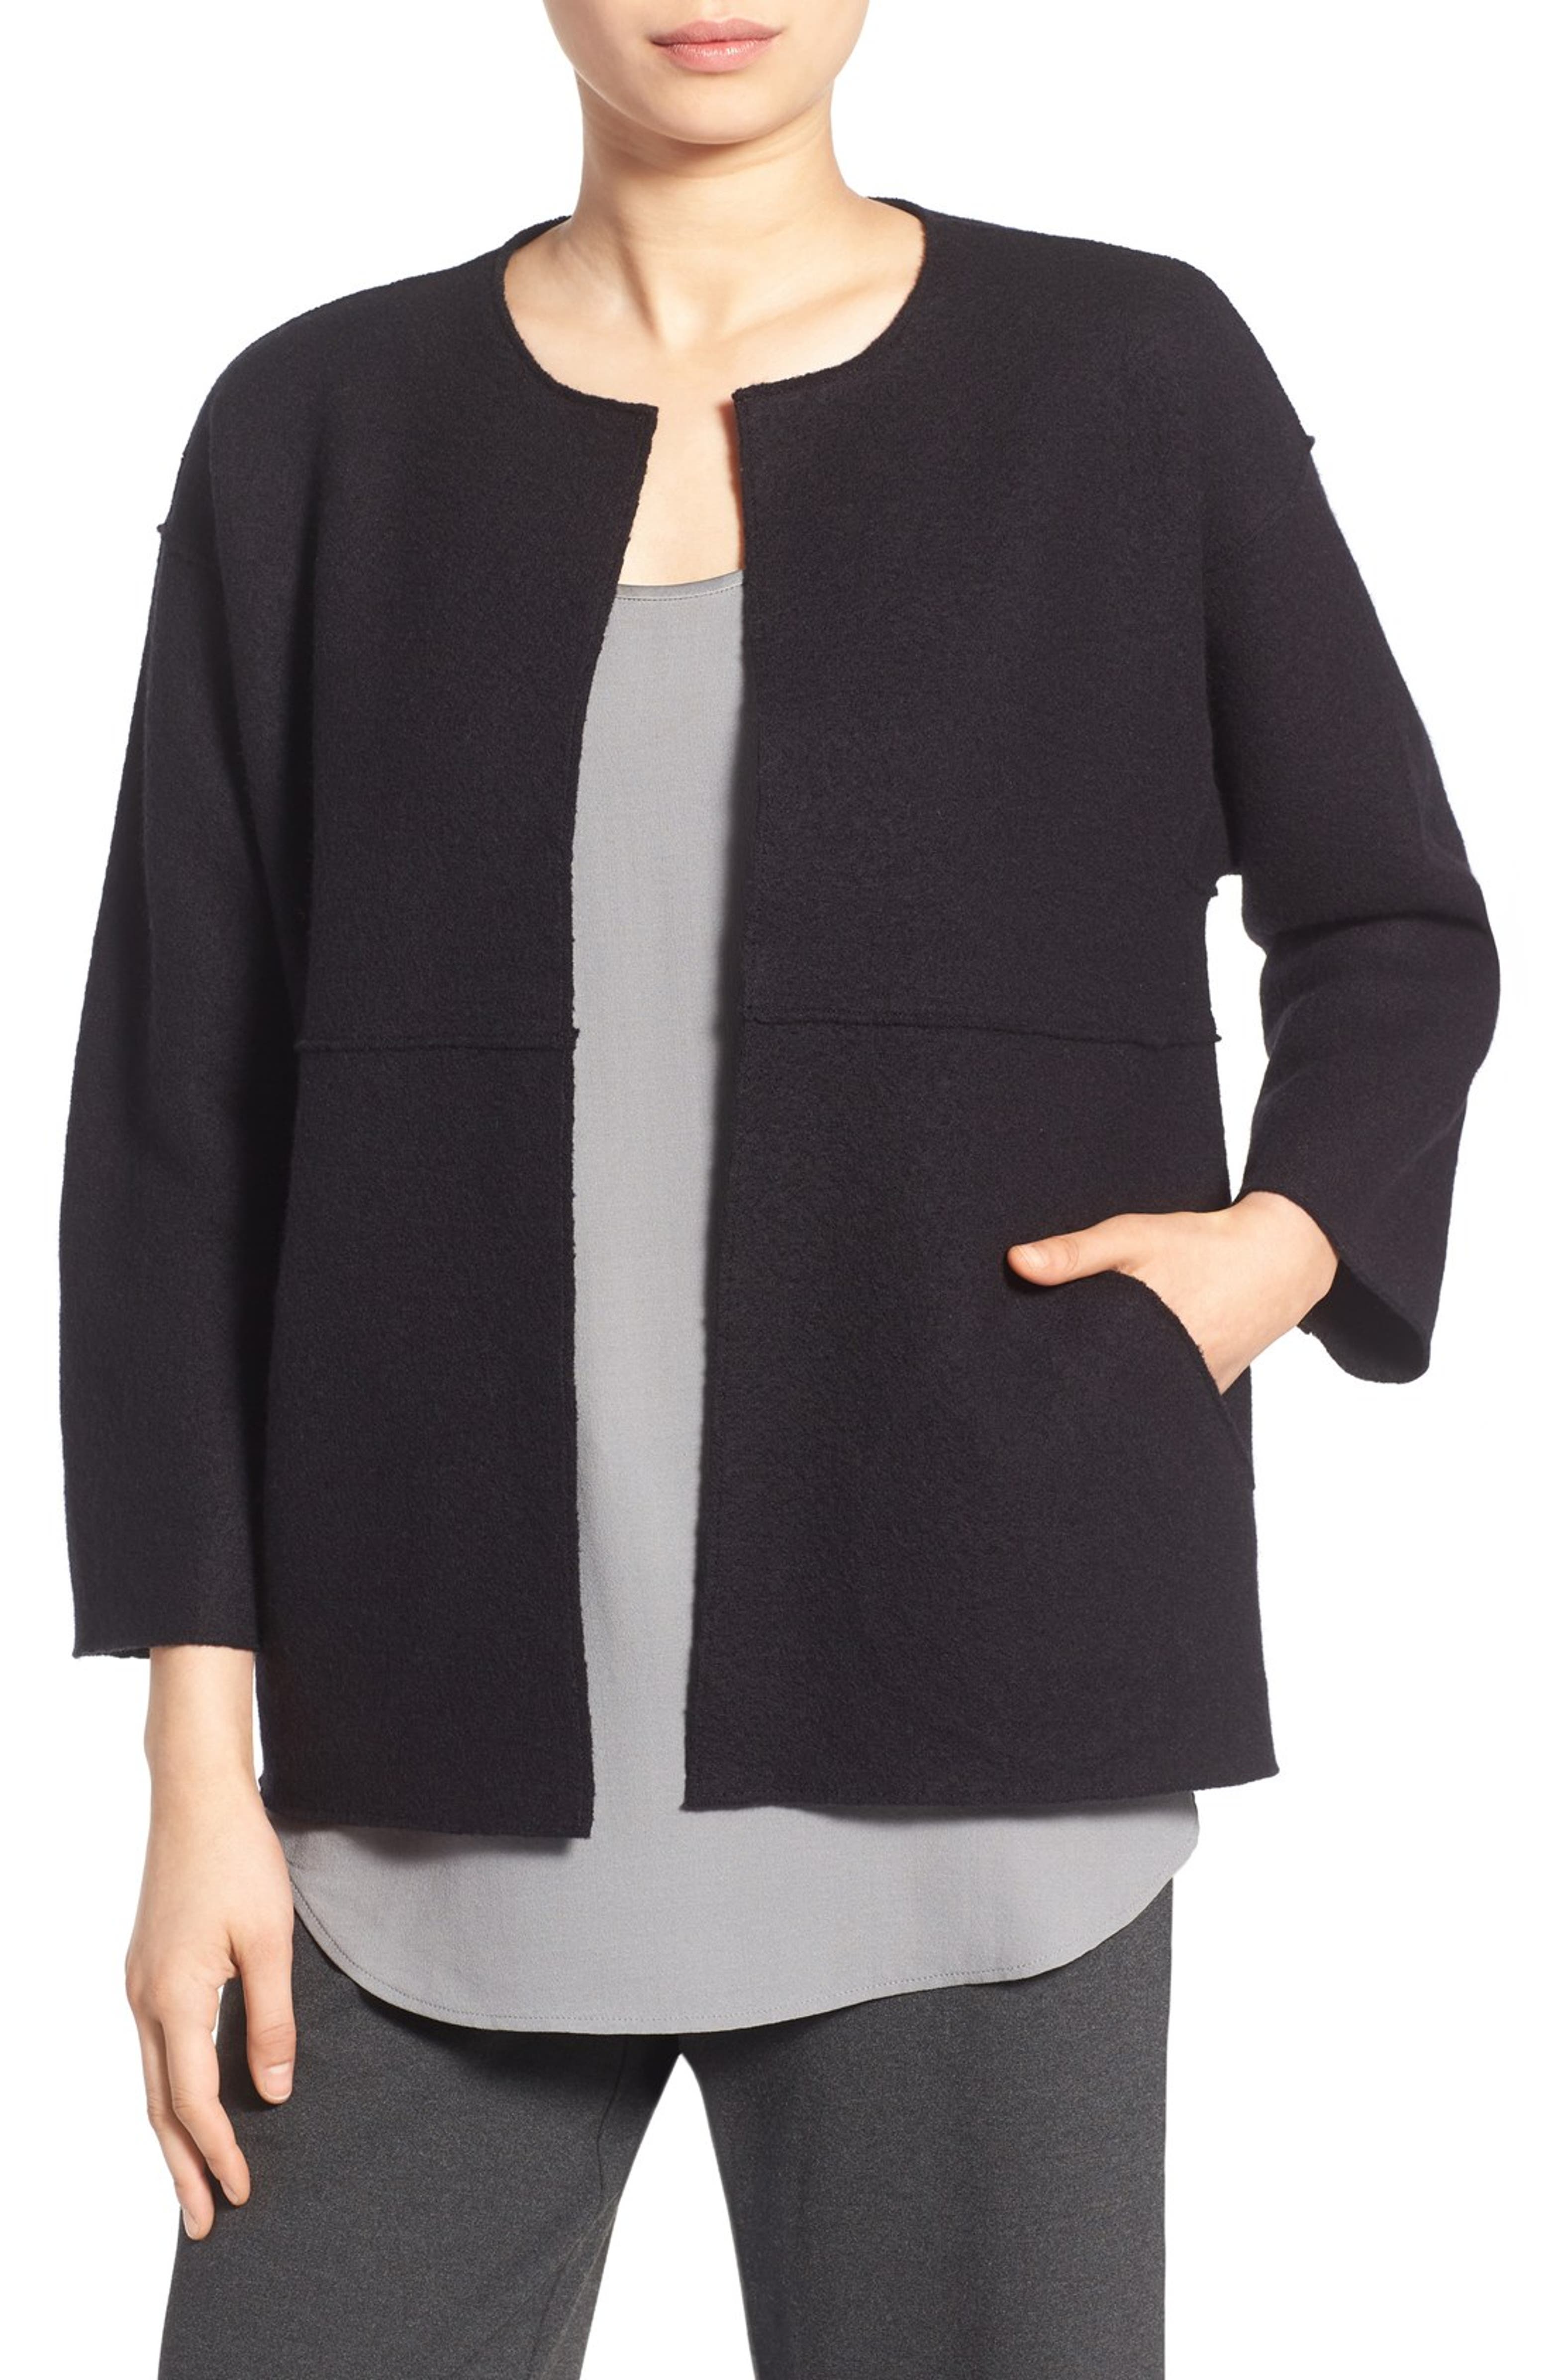 Eileen Fisher Round Neck Wool Jacket (Regular & Petite) | Nordstrom